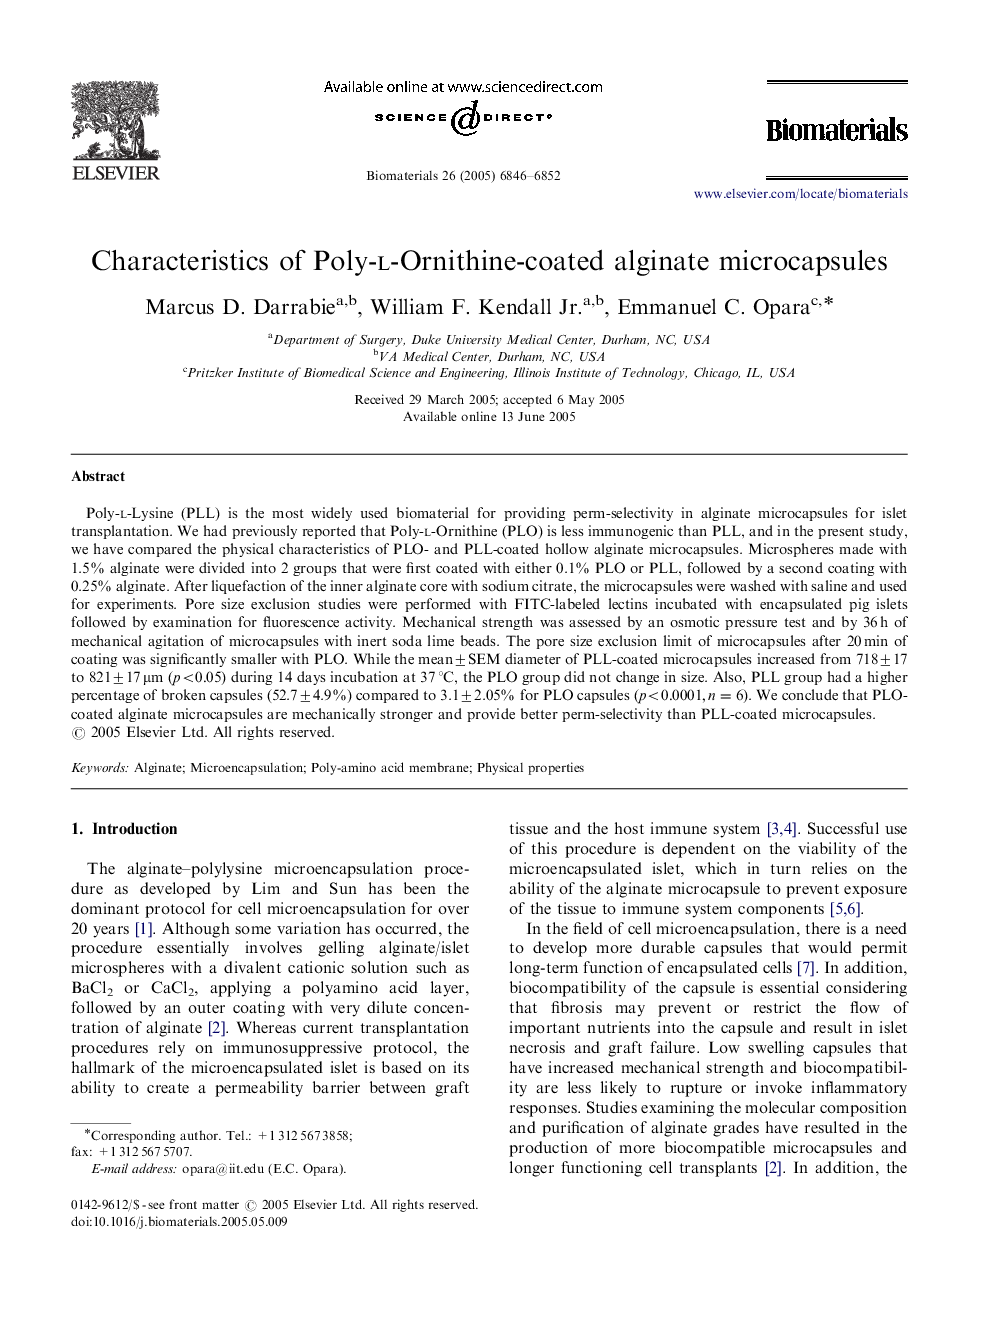 Characteristics of Poly-l-Ornithine-coated alginate microcapsules